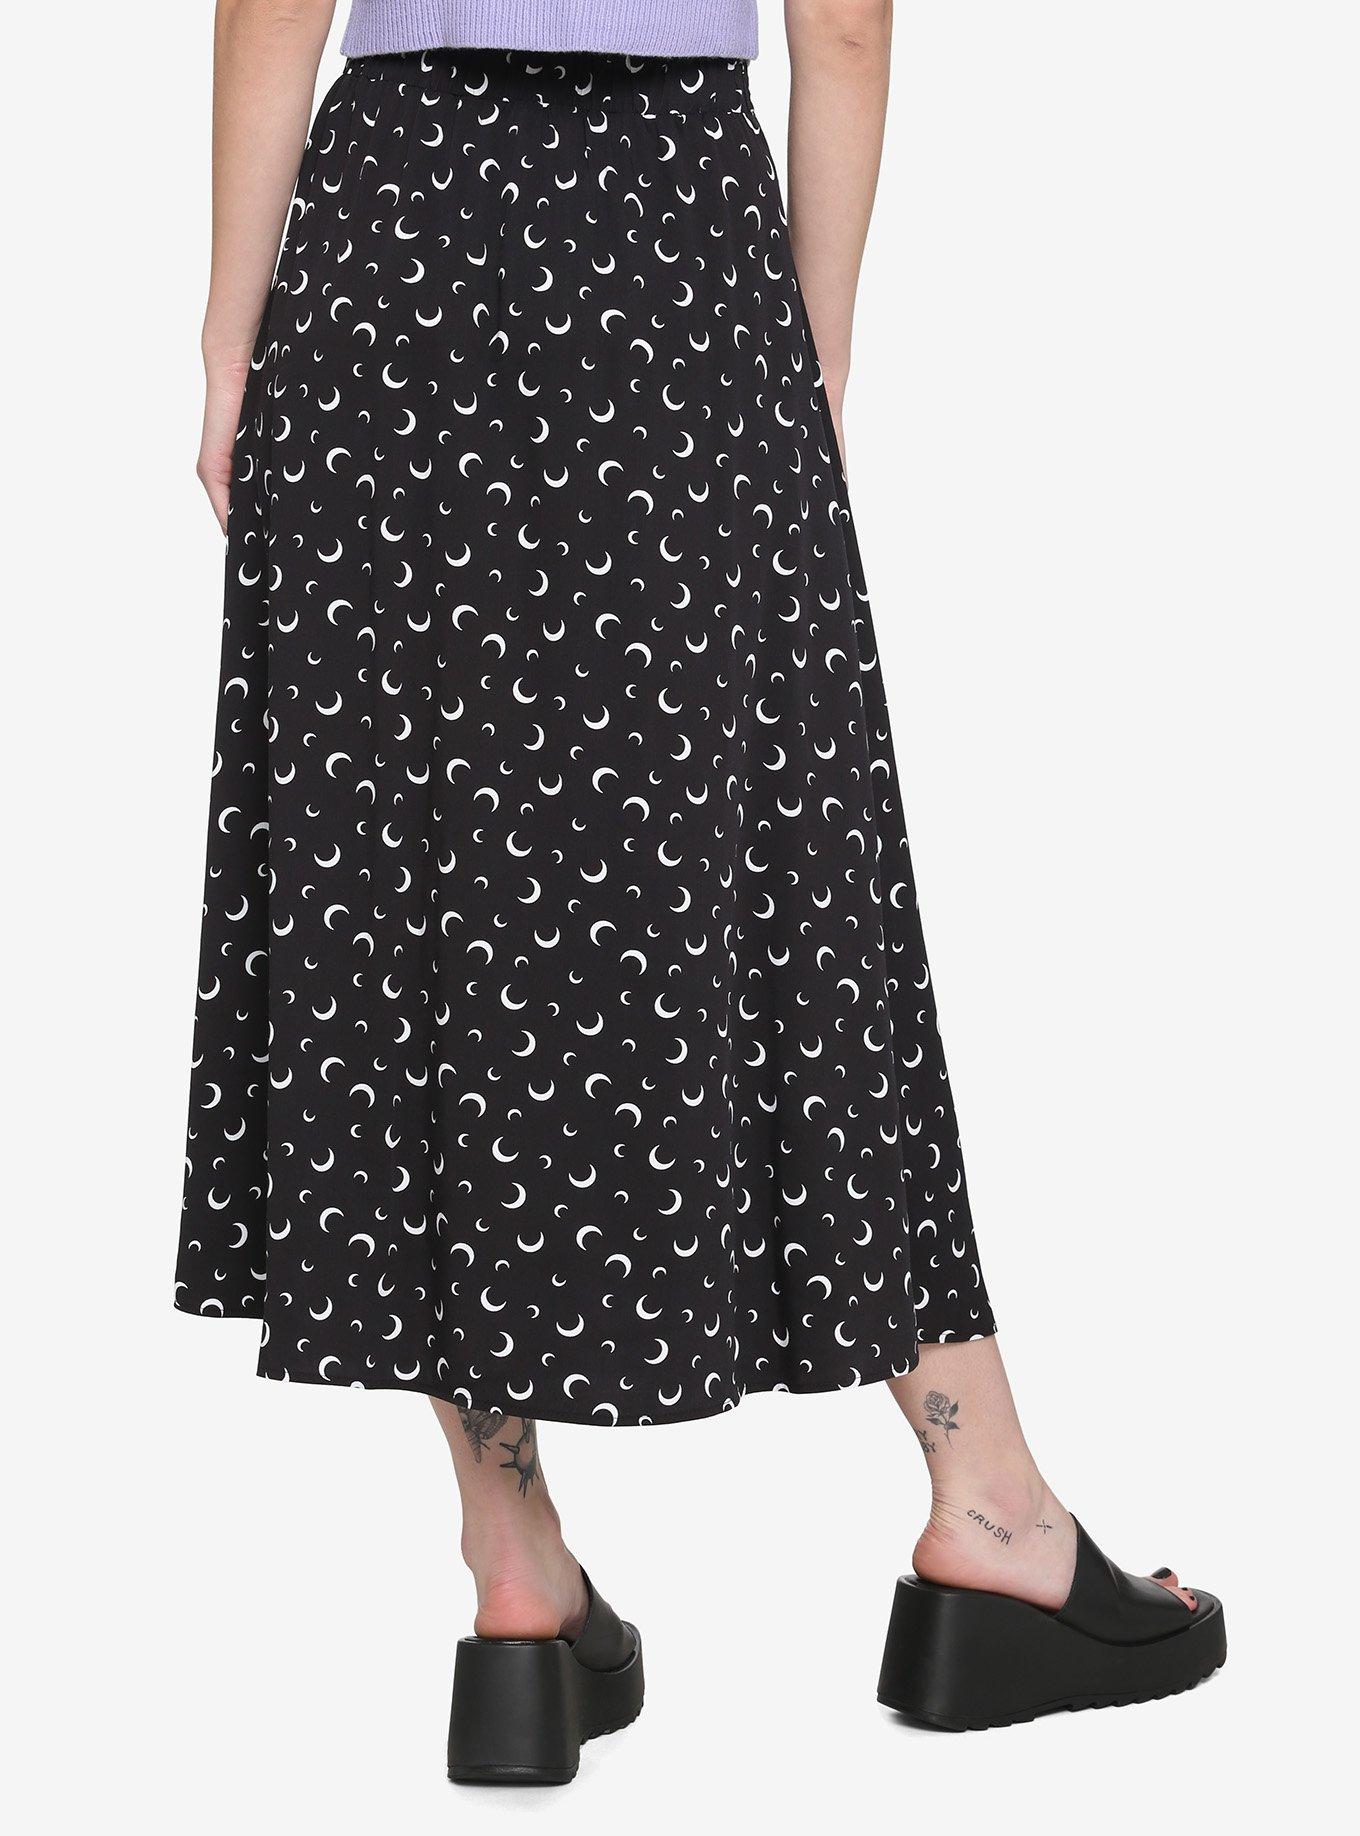 Crescent Moon Midi Skirt, BLACK, alternate